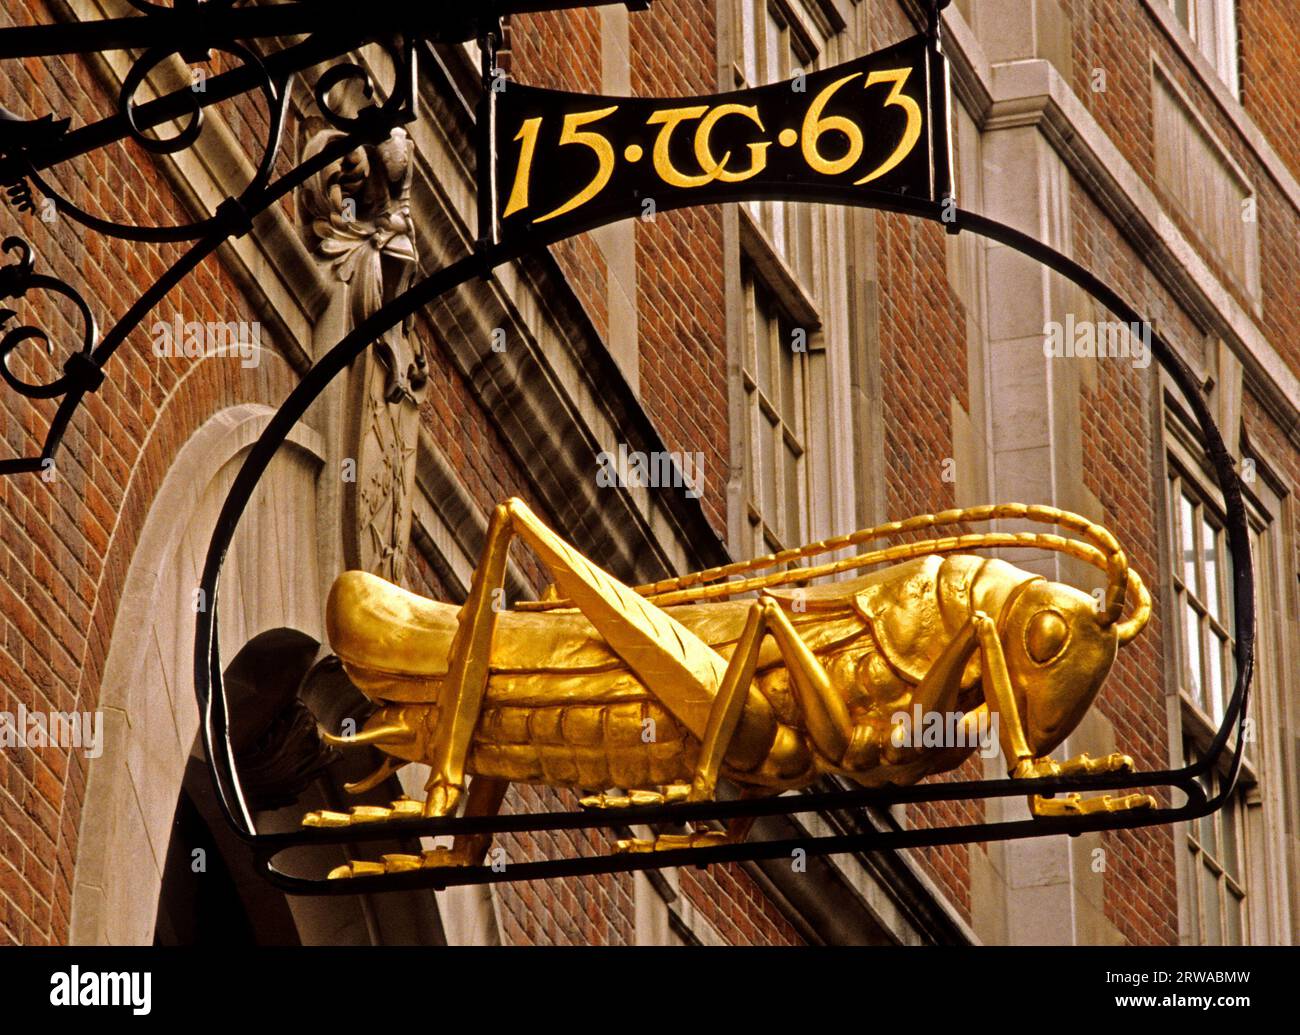 Lombard Street, signo de Martins Bank, saltamontes, signos, Londres, Inglaterra Foto de stock